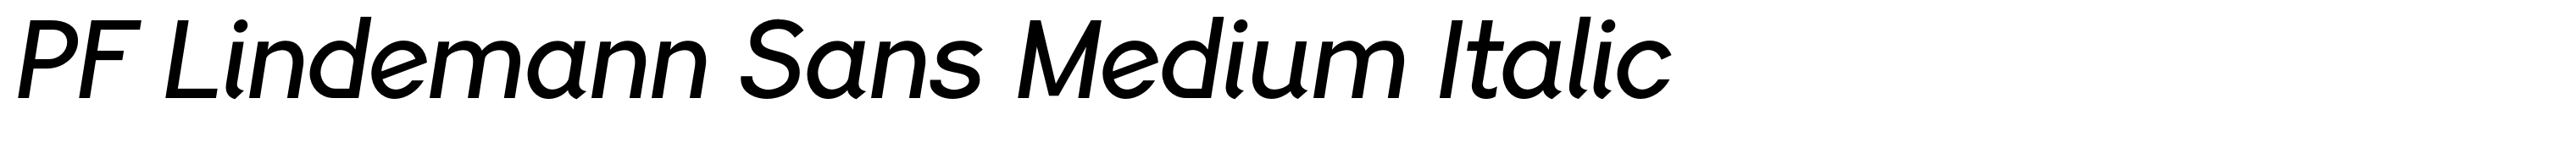 PF Lindemann Sans Medium Italic